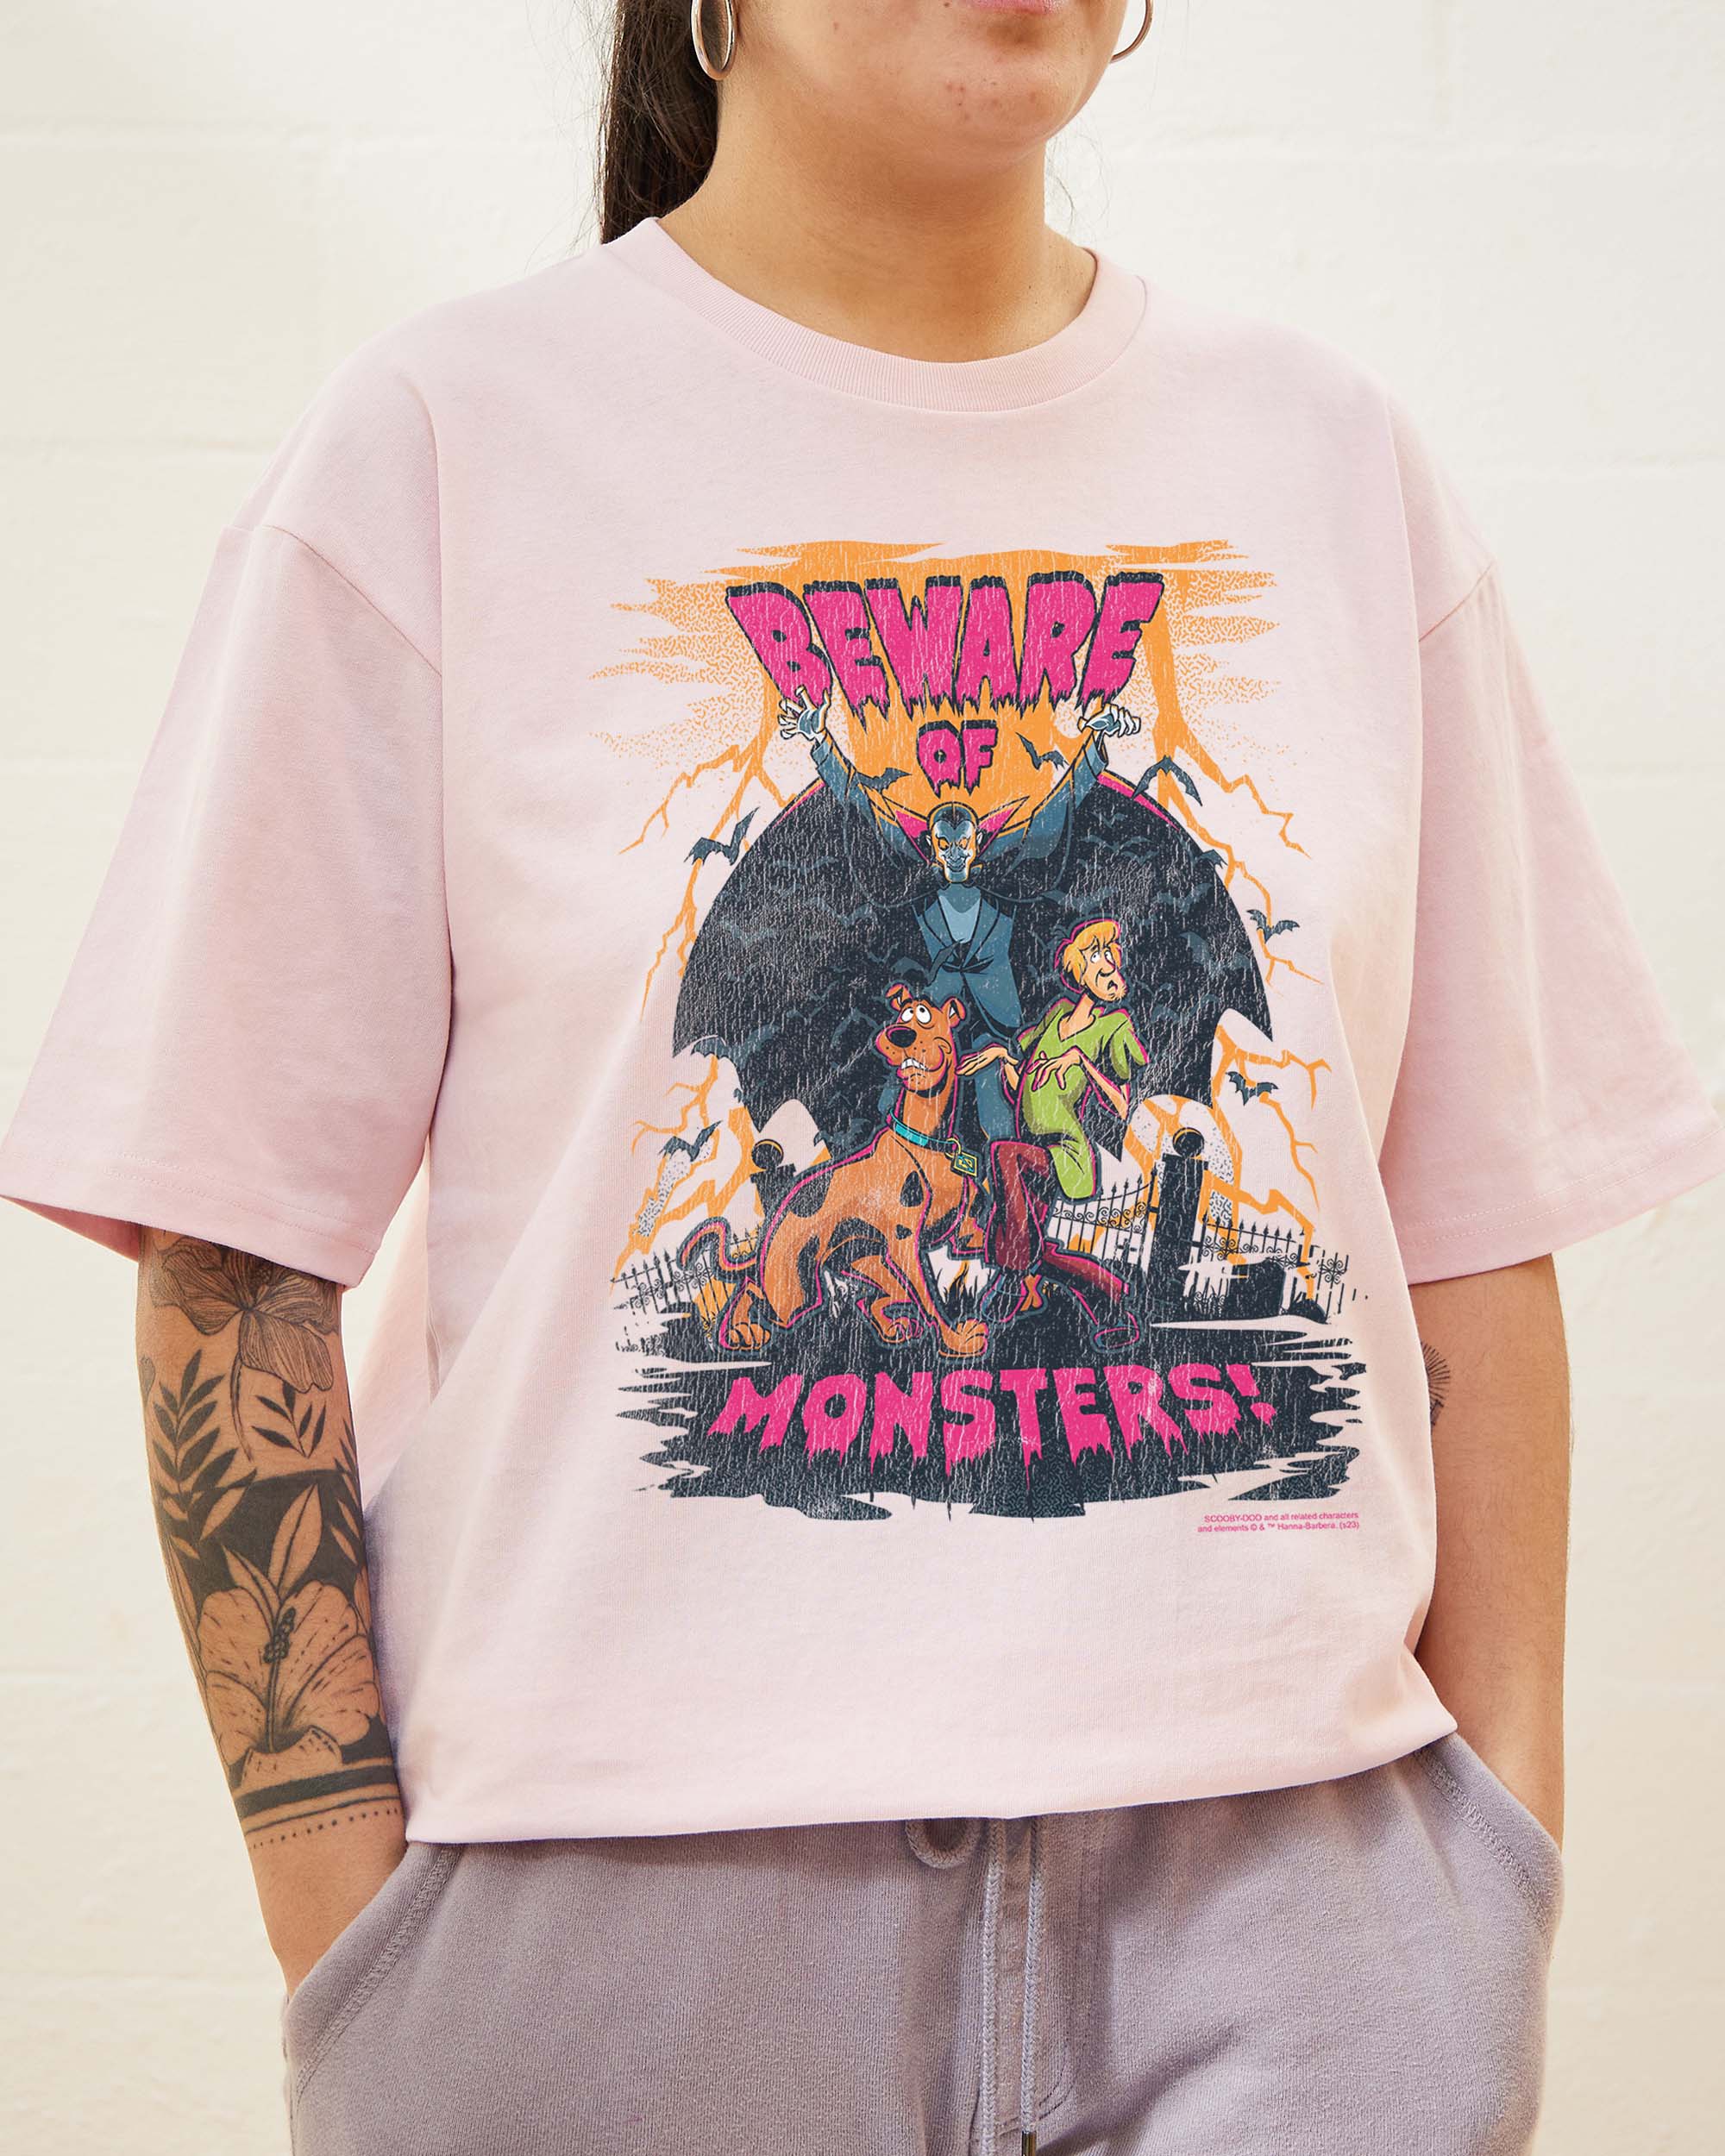 Beware of Monsters T-Shirt Europe Online Pink